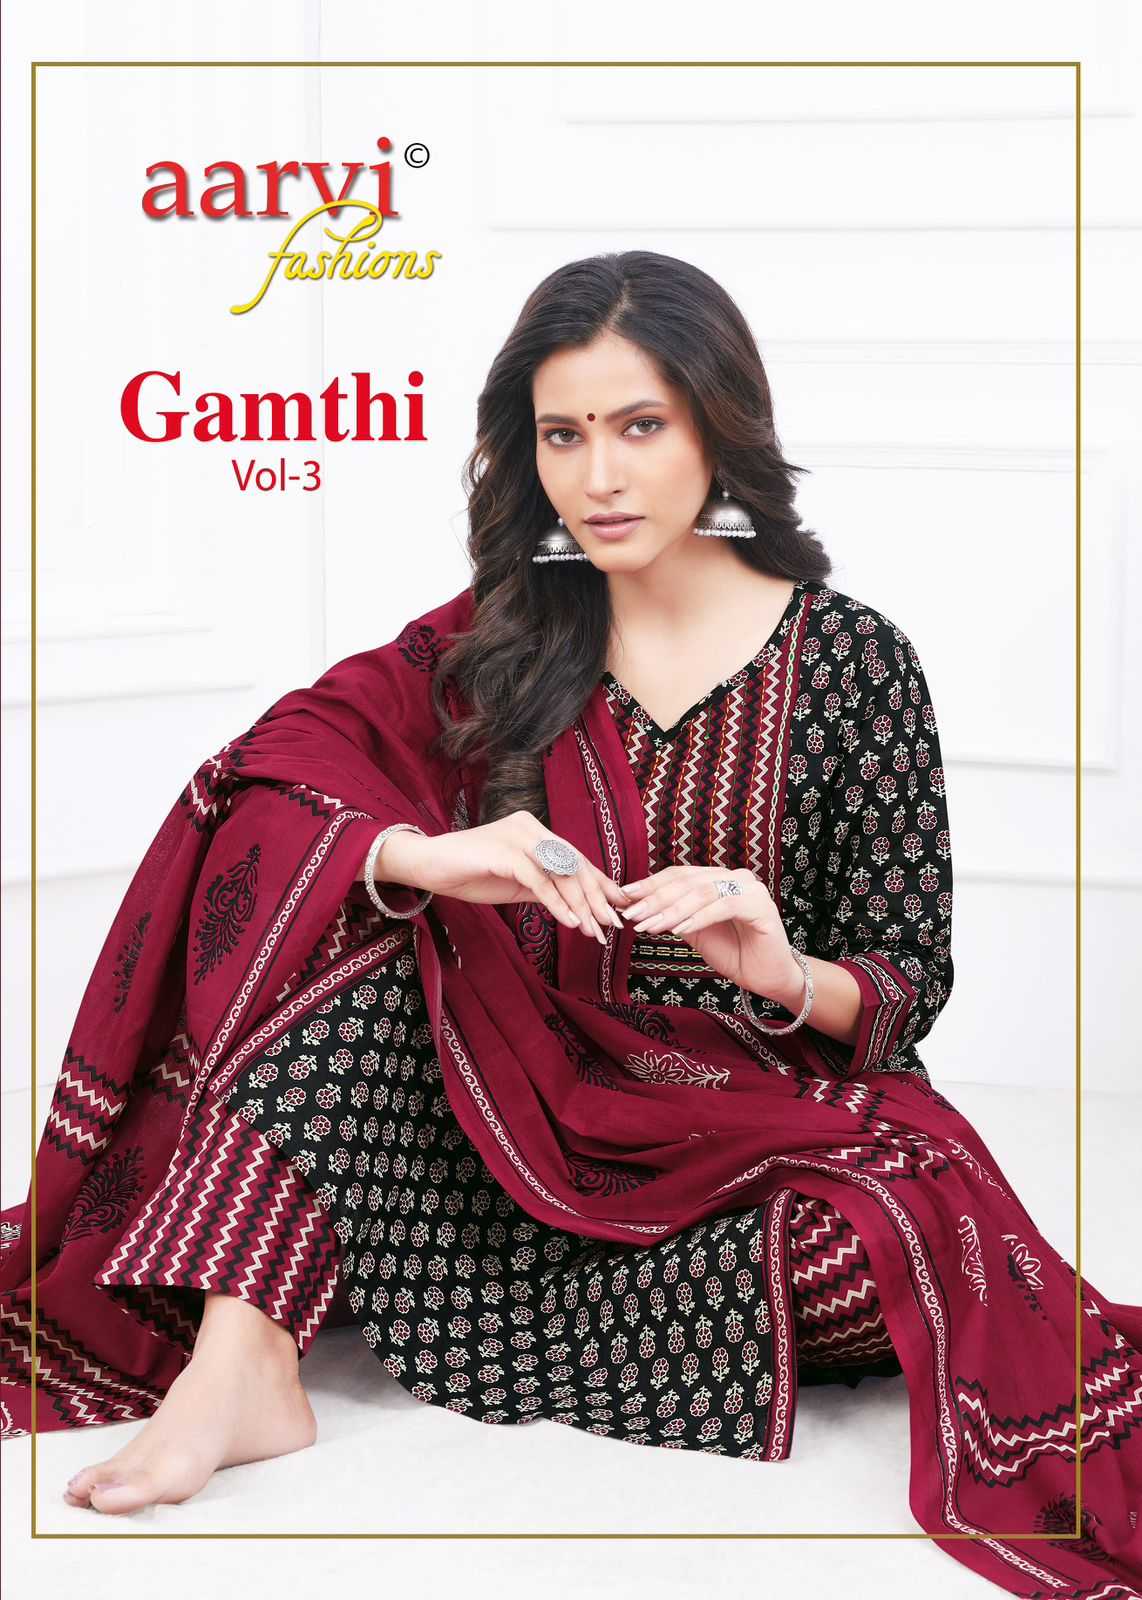 aarvi fashion gamthi vol 3 fullstitch casual wear cotton kurti pant dupatta set